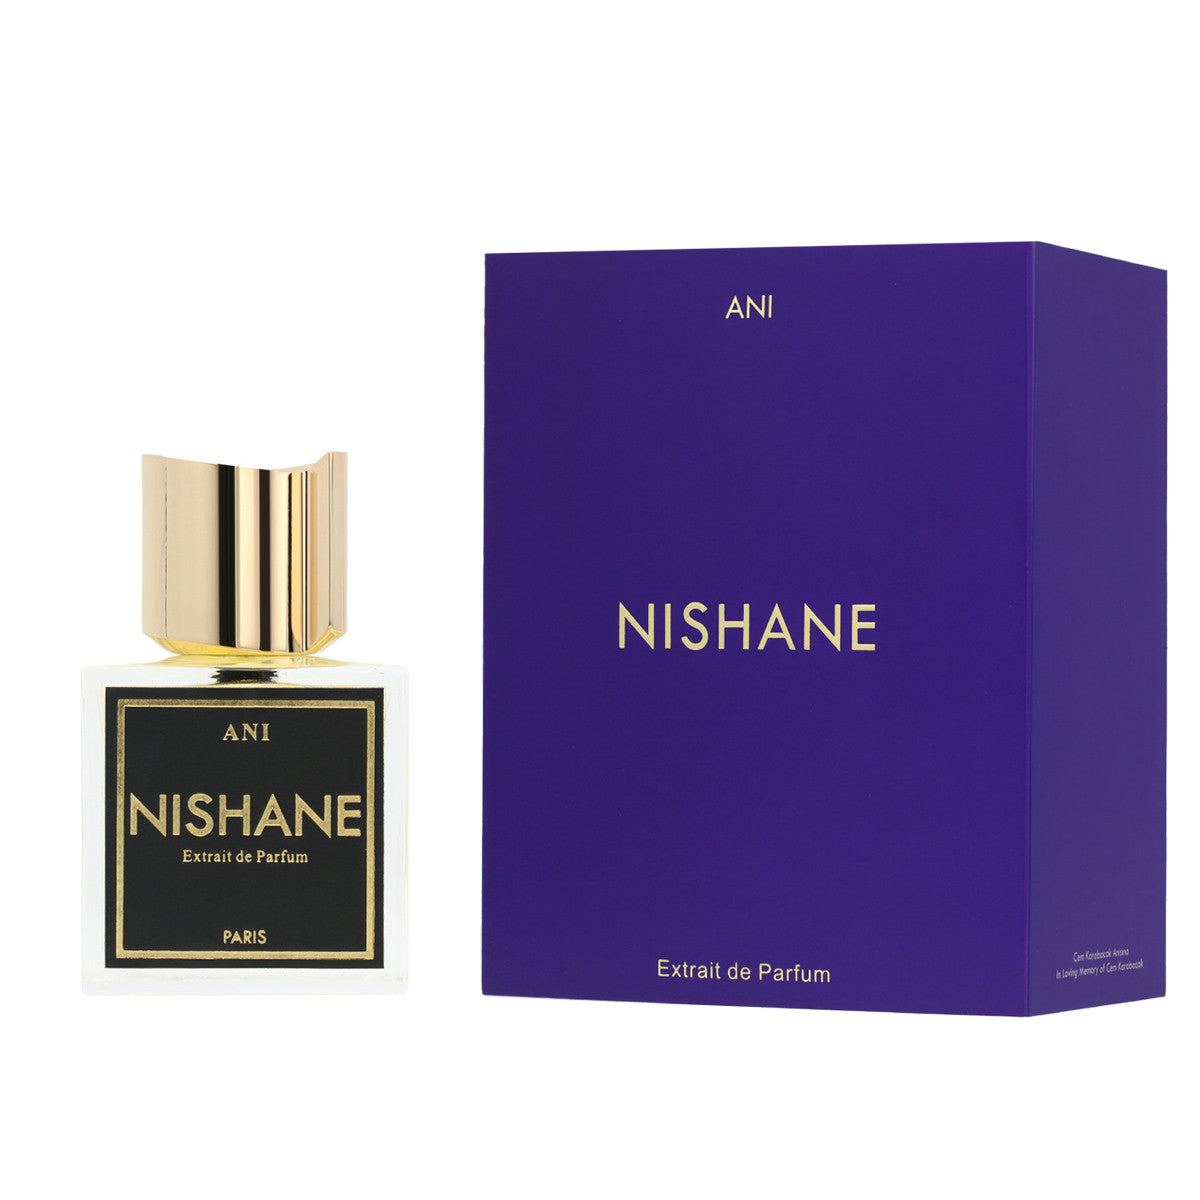 Ani Nishane extrait de parfum 100 ml